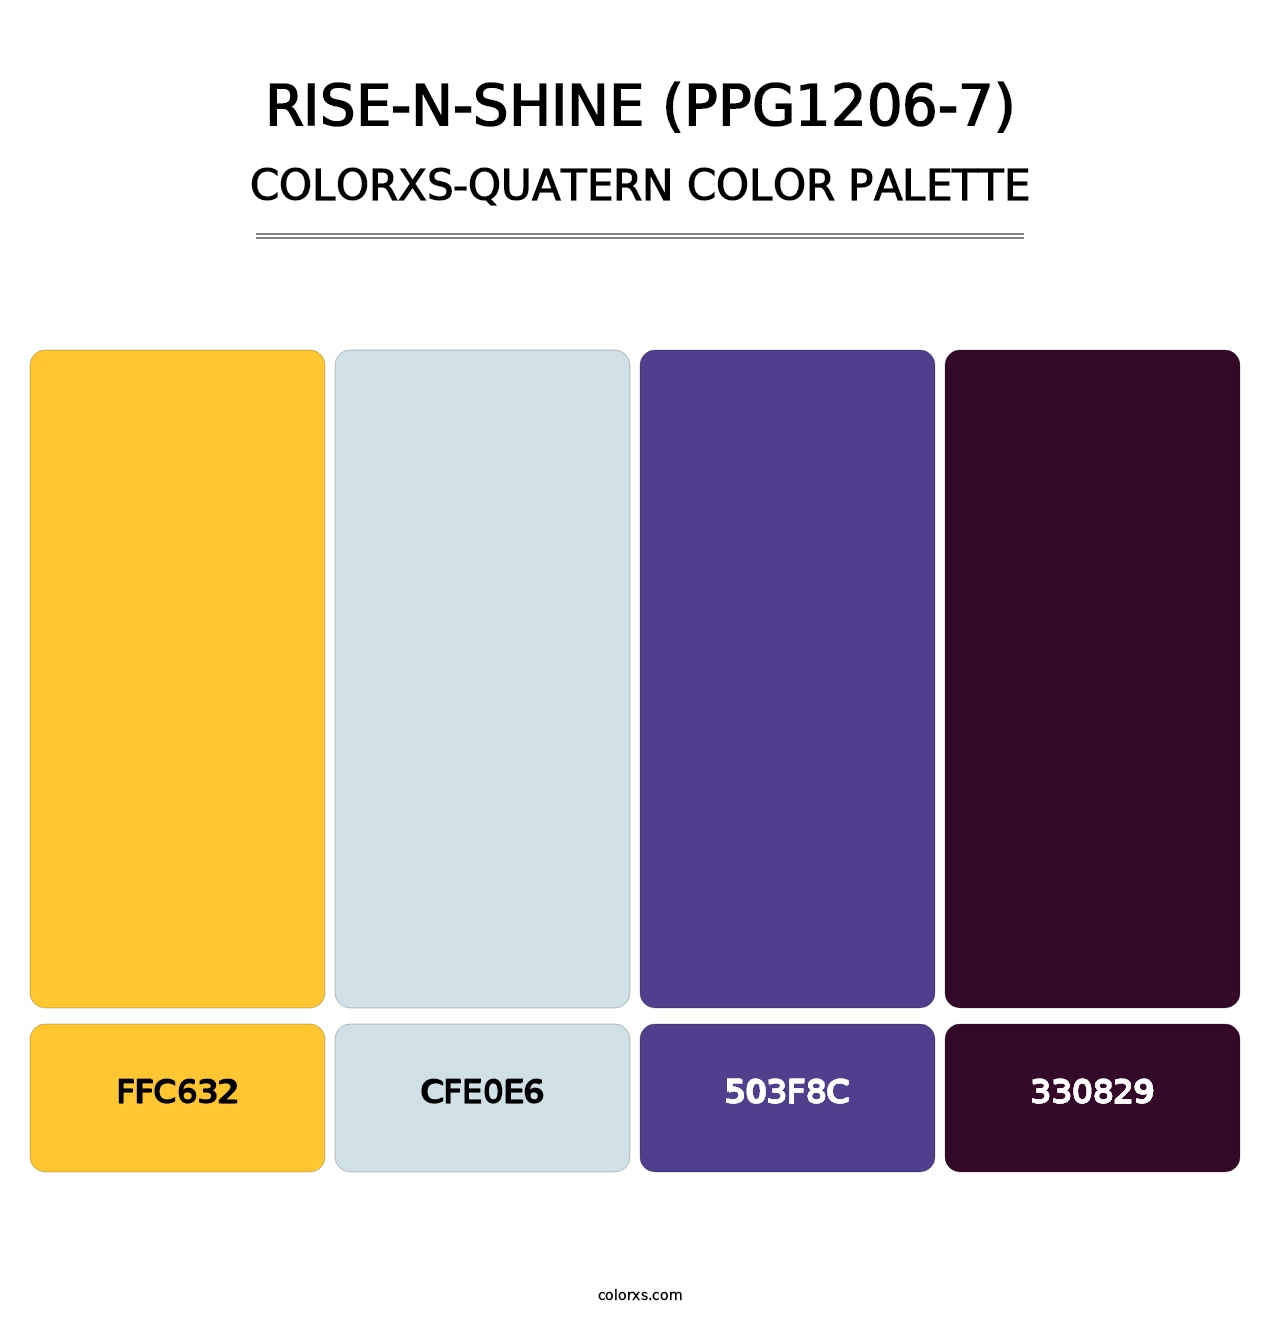 Rise-N-Shine (PPG1206-7) - Colorxs Quatern Palette